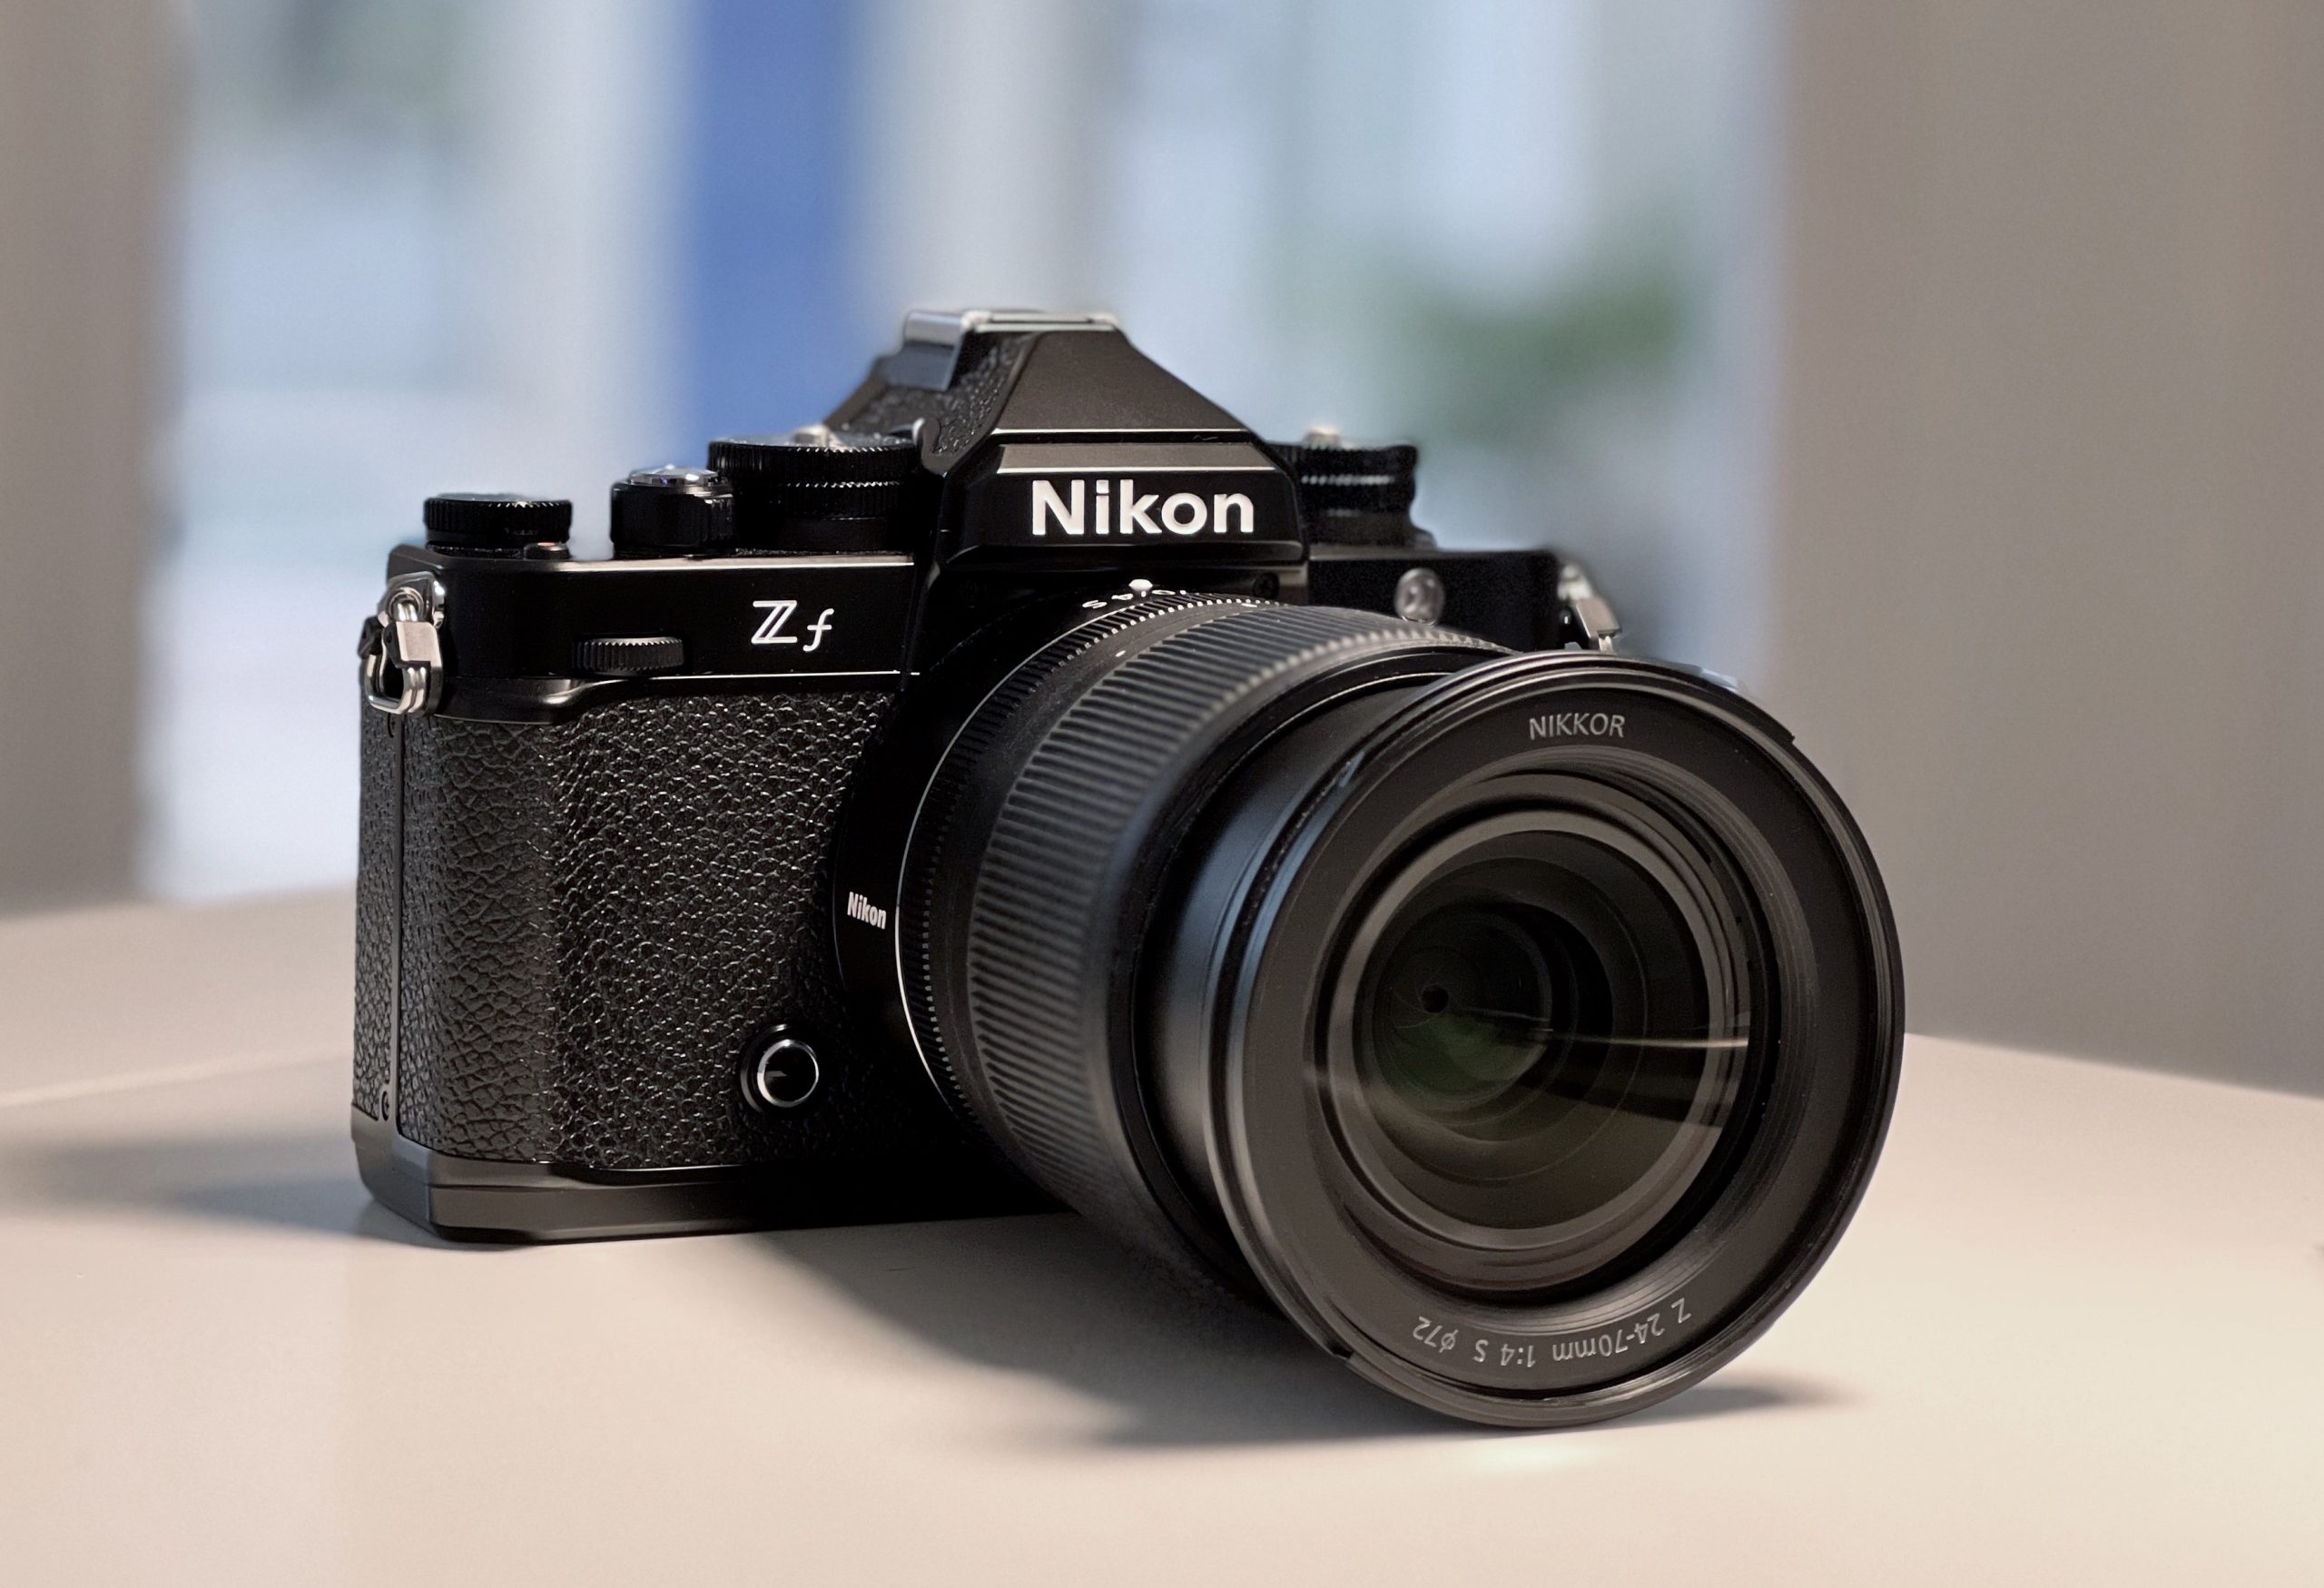 Nikon Z f | Full-Frame Mirrorless Stills/Video Camera with Iconic Styling |  Nikon USA Model